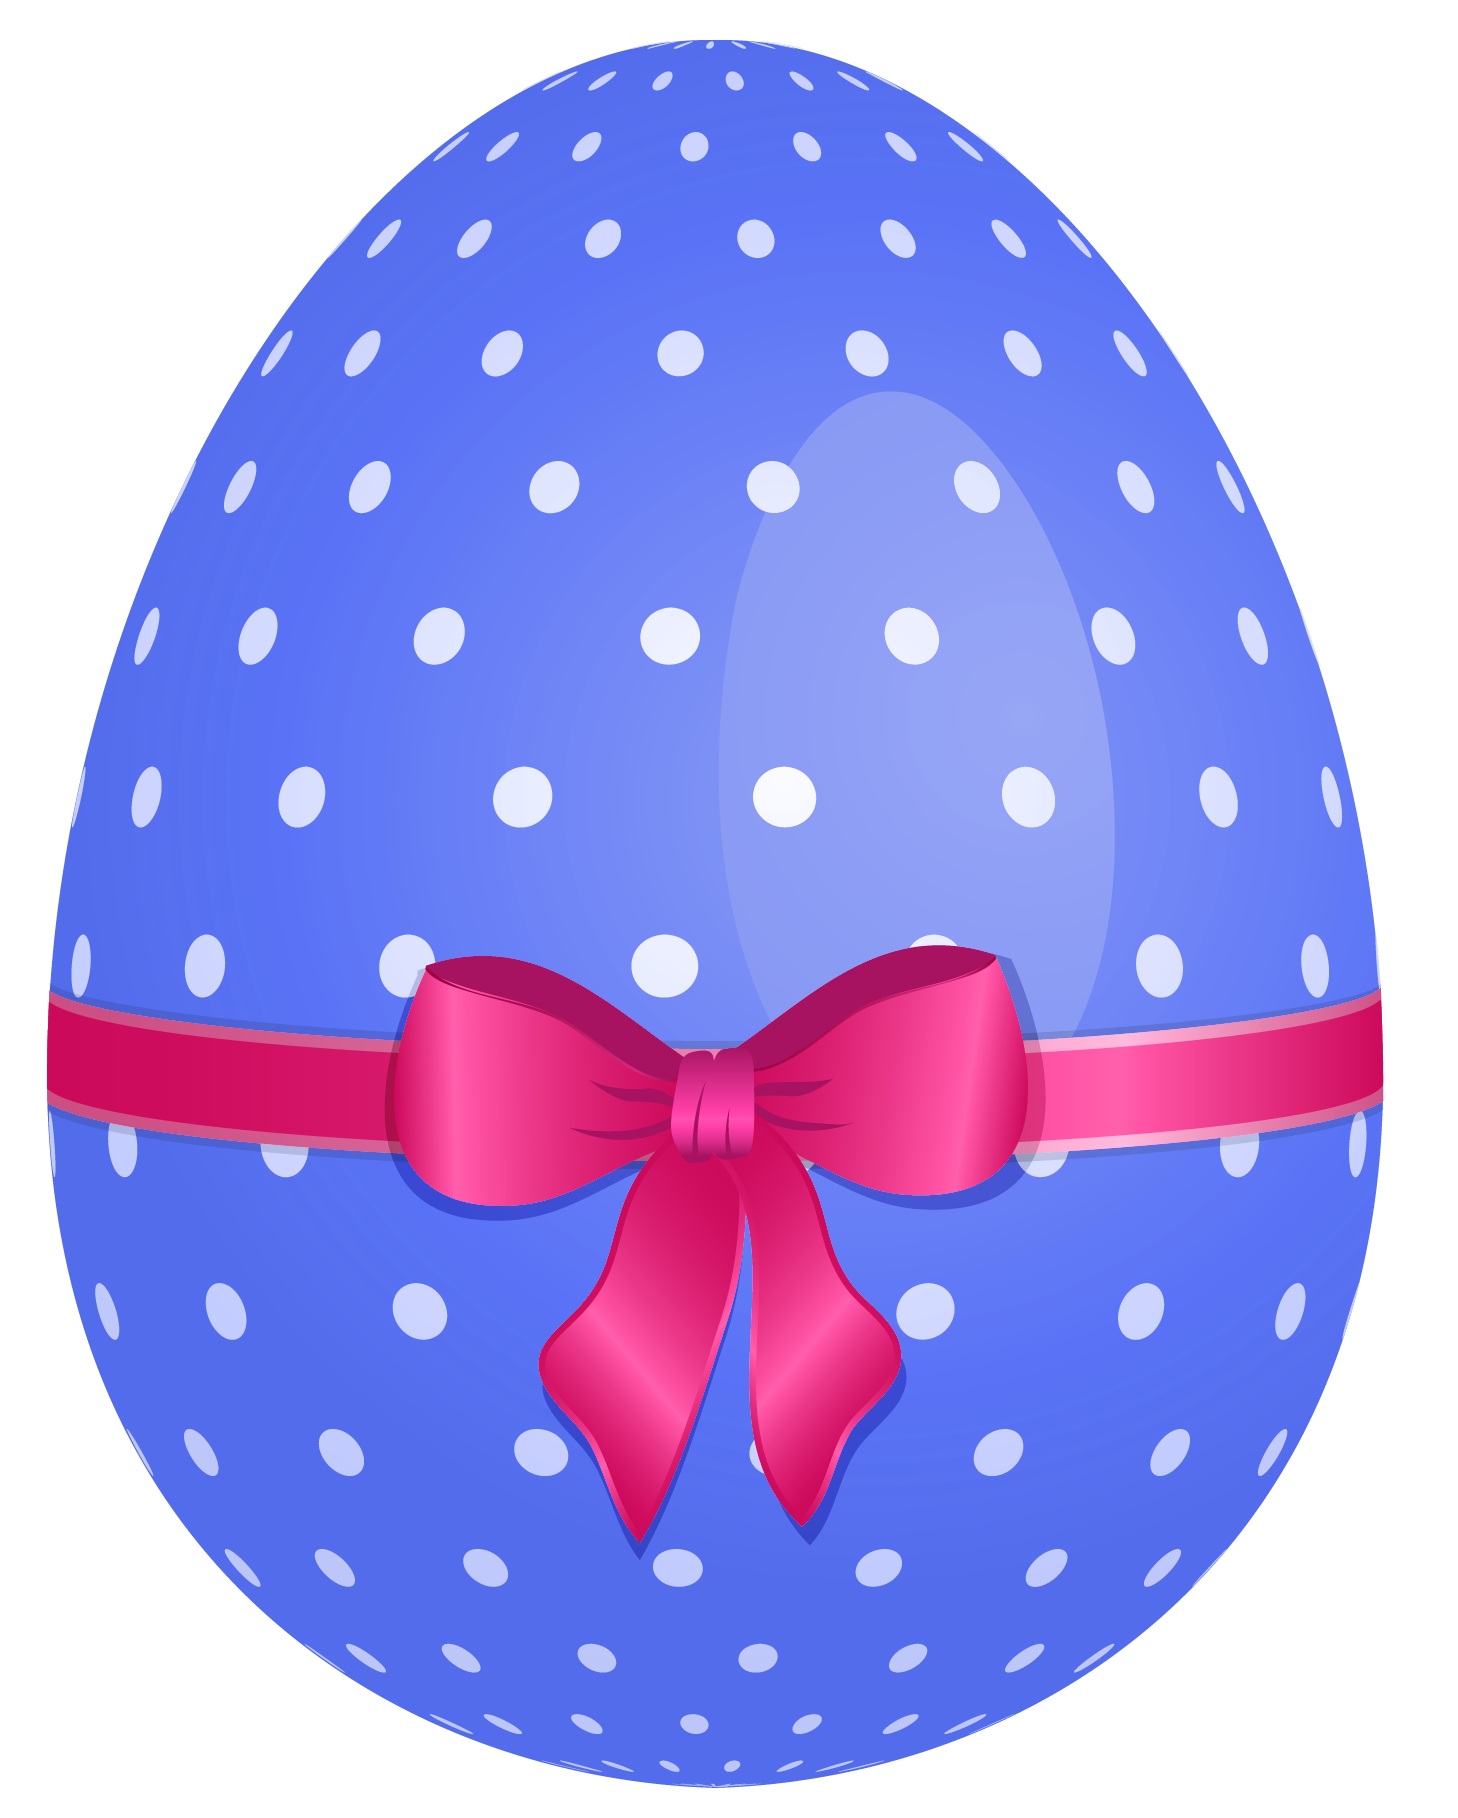 Archivo de PNG de huevo de Pascua azul